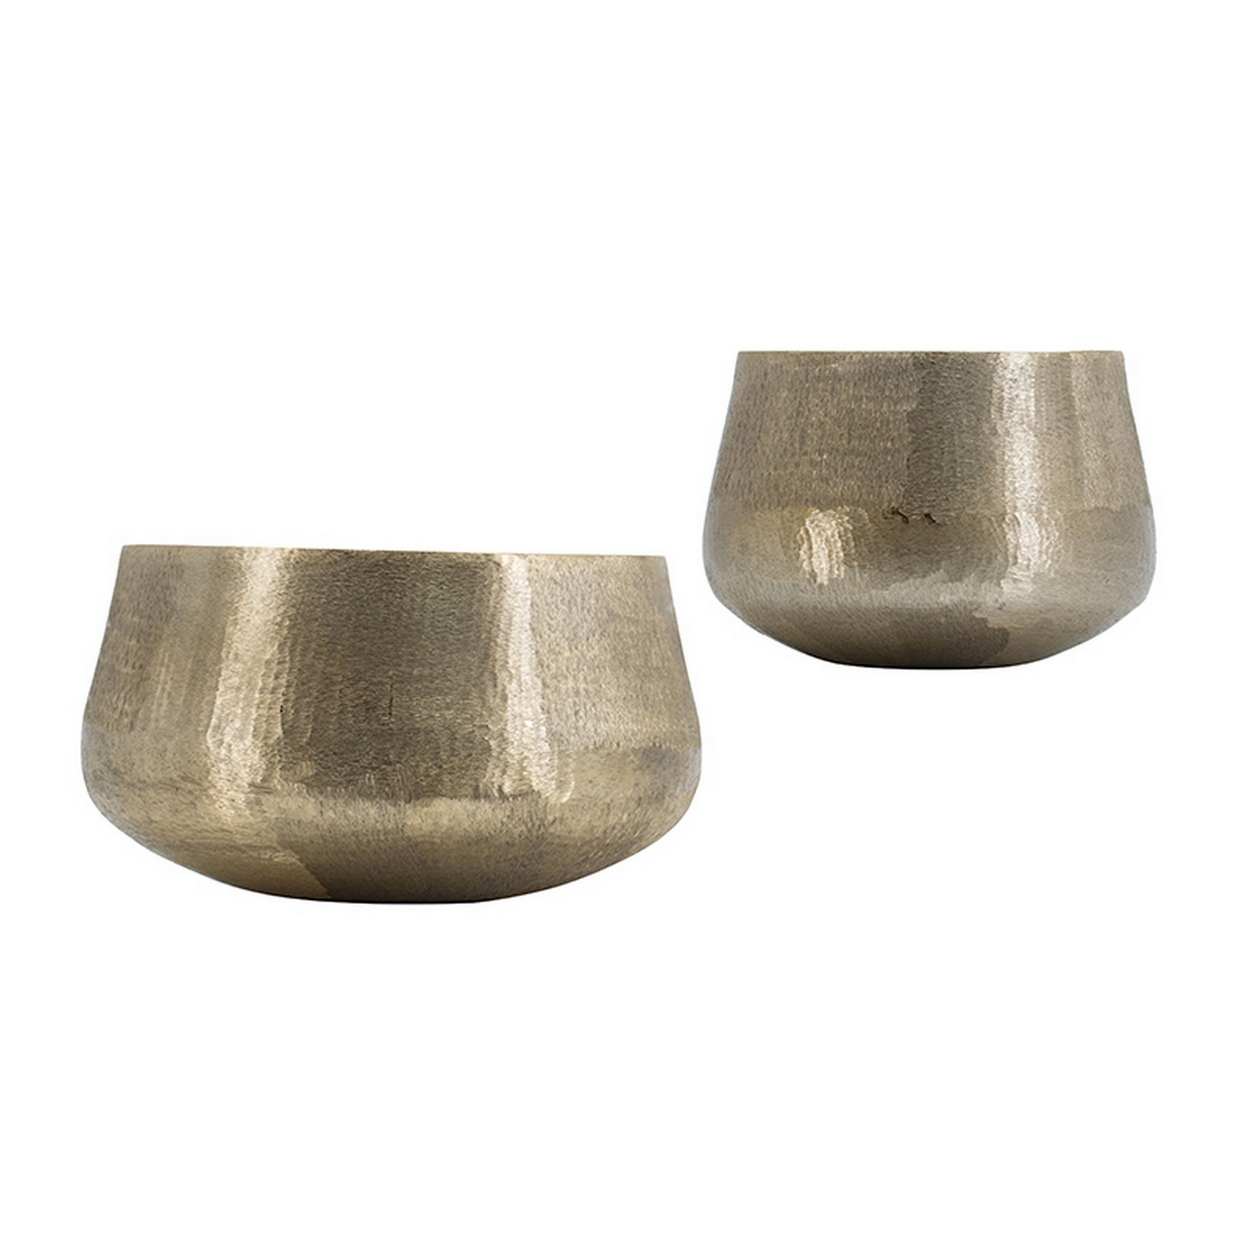 Set Of 2 Metal Bowls, Seude Gold Finish, Curved Shape, Streaked Texture- Saltoro Sherpi